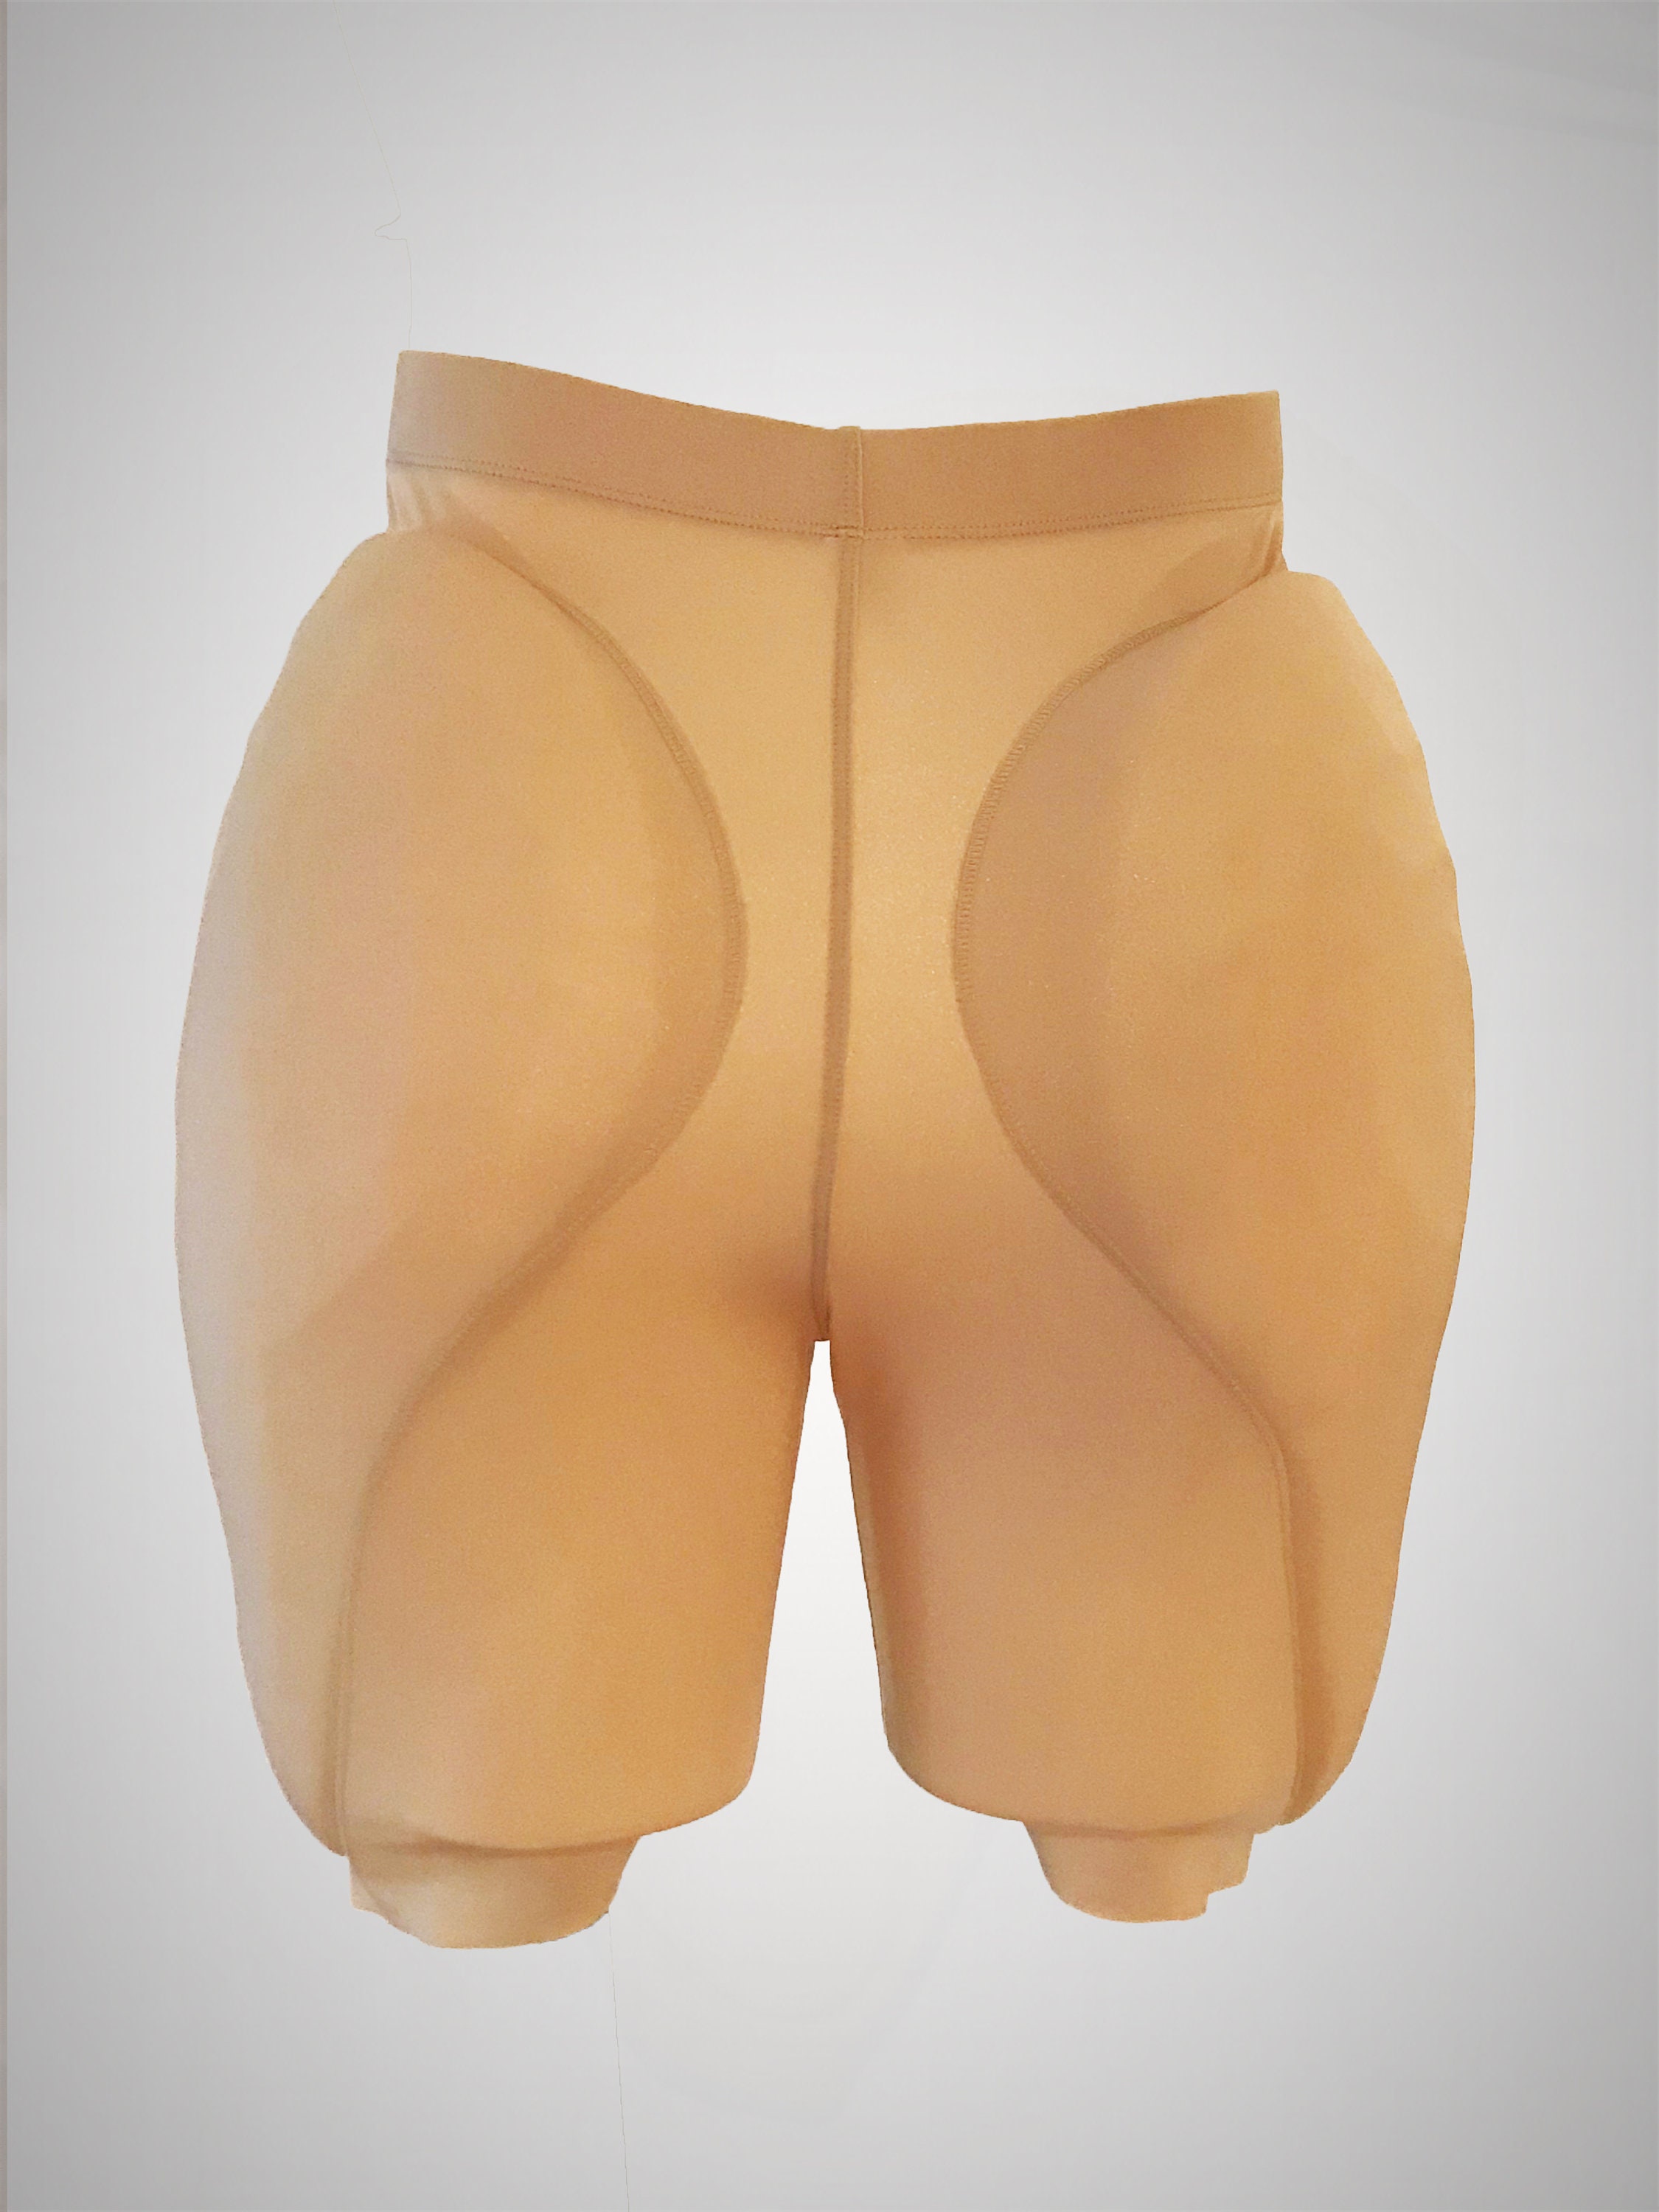 Hip Pads for Women Hip Dip Pads Fake Butt Padded Underwear Hip